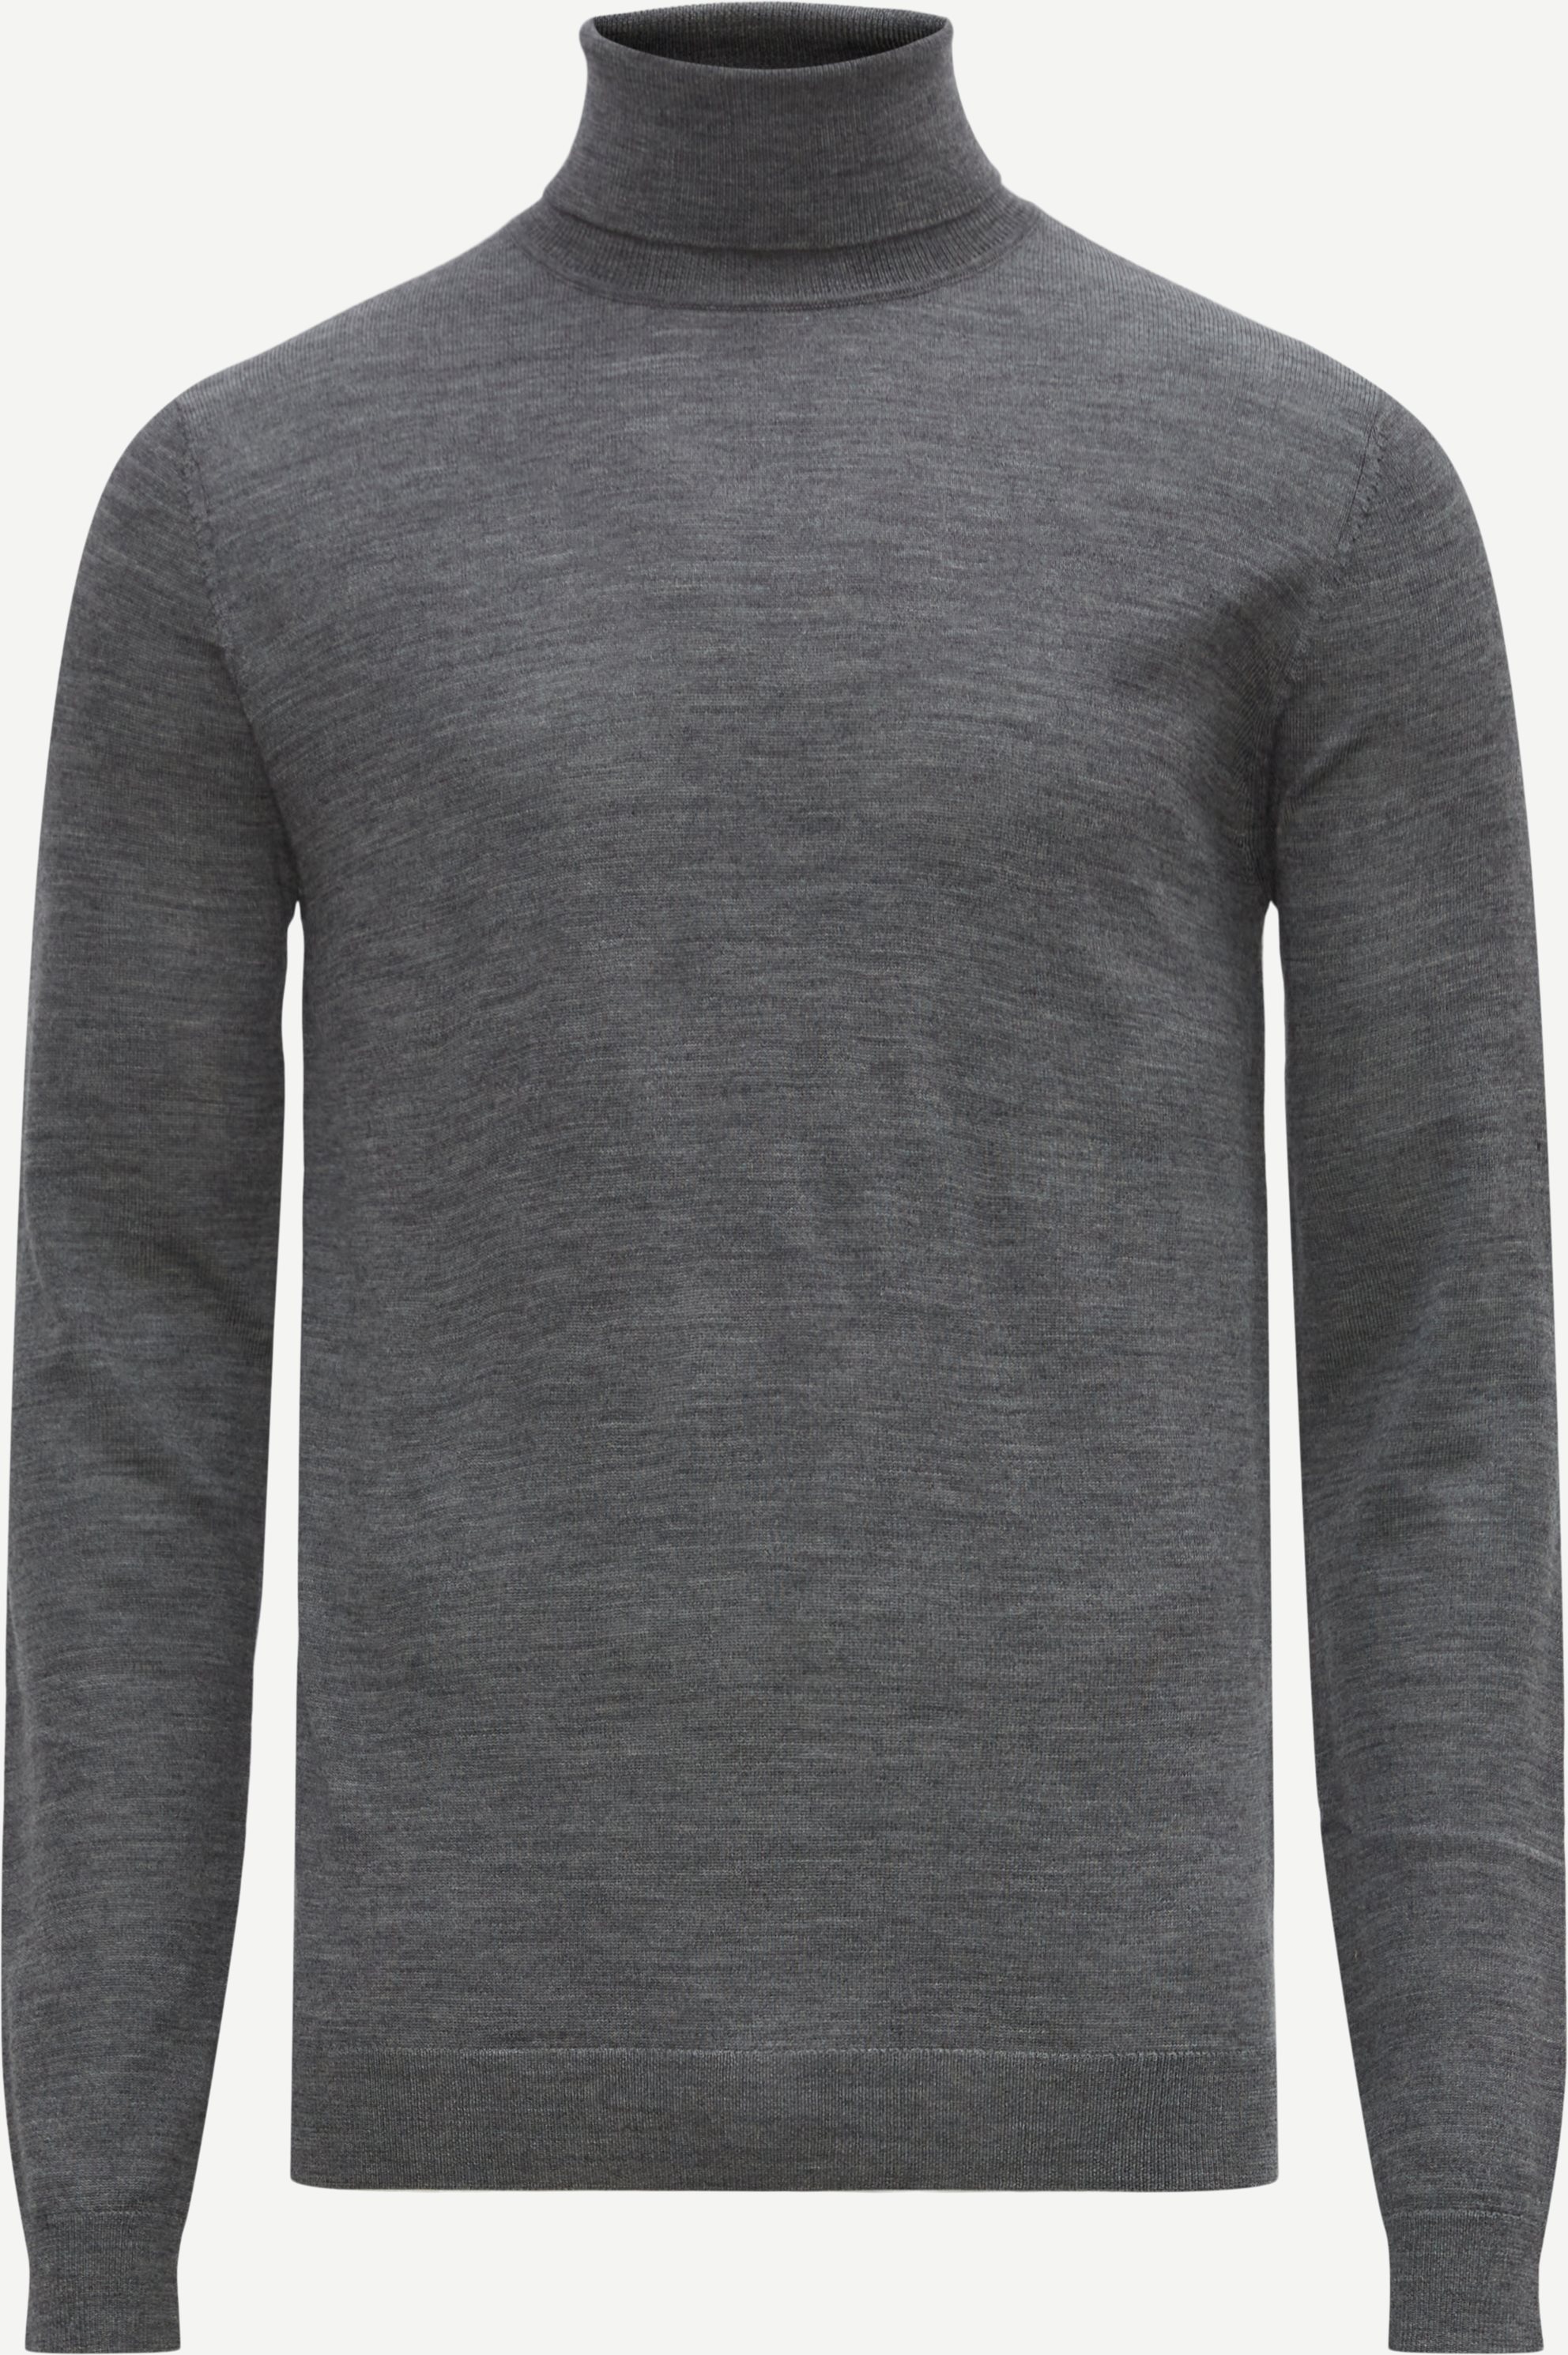 Knitwear - Regular fit - Grey